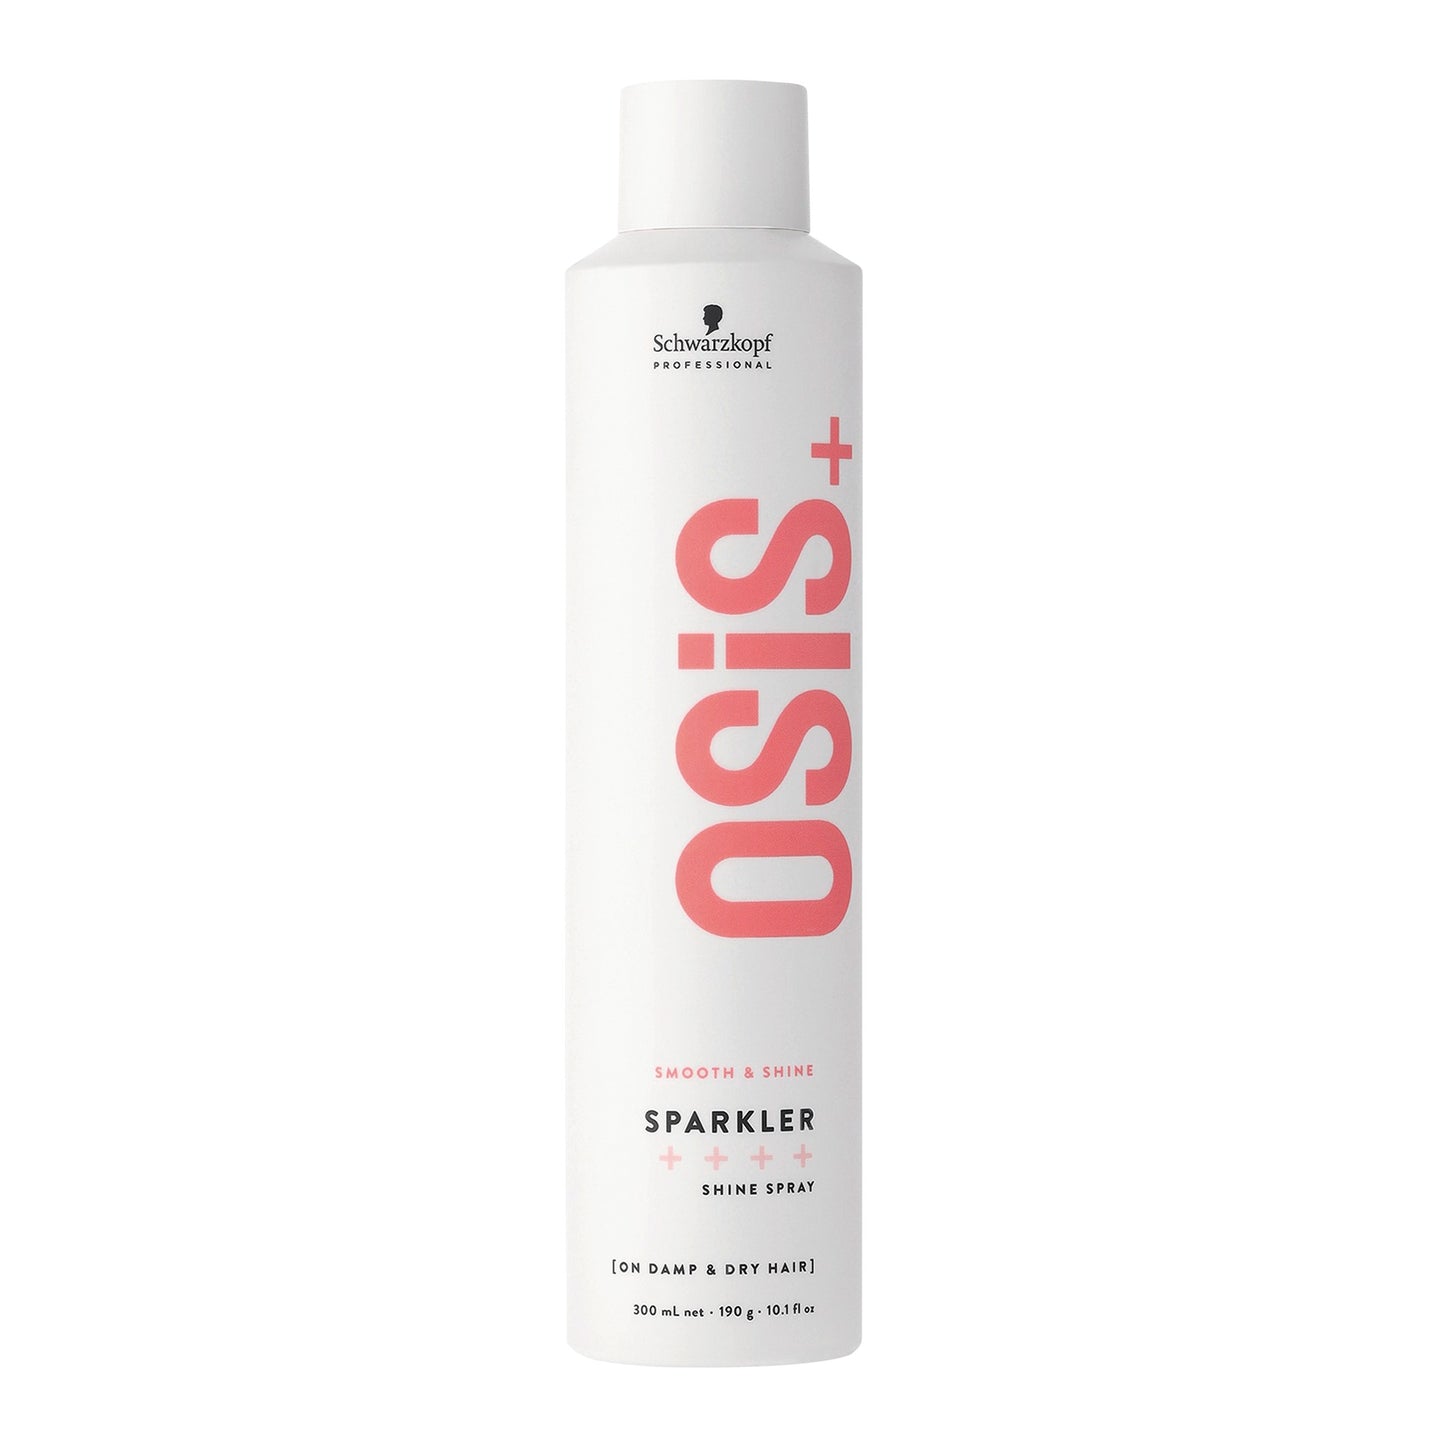 Osis+ Sparkler, Shine Spray, 300ml